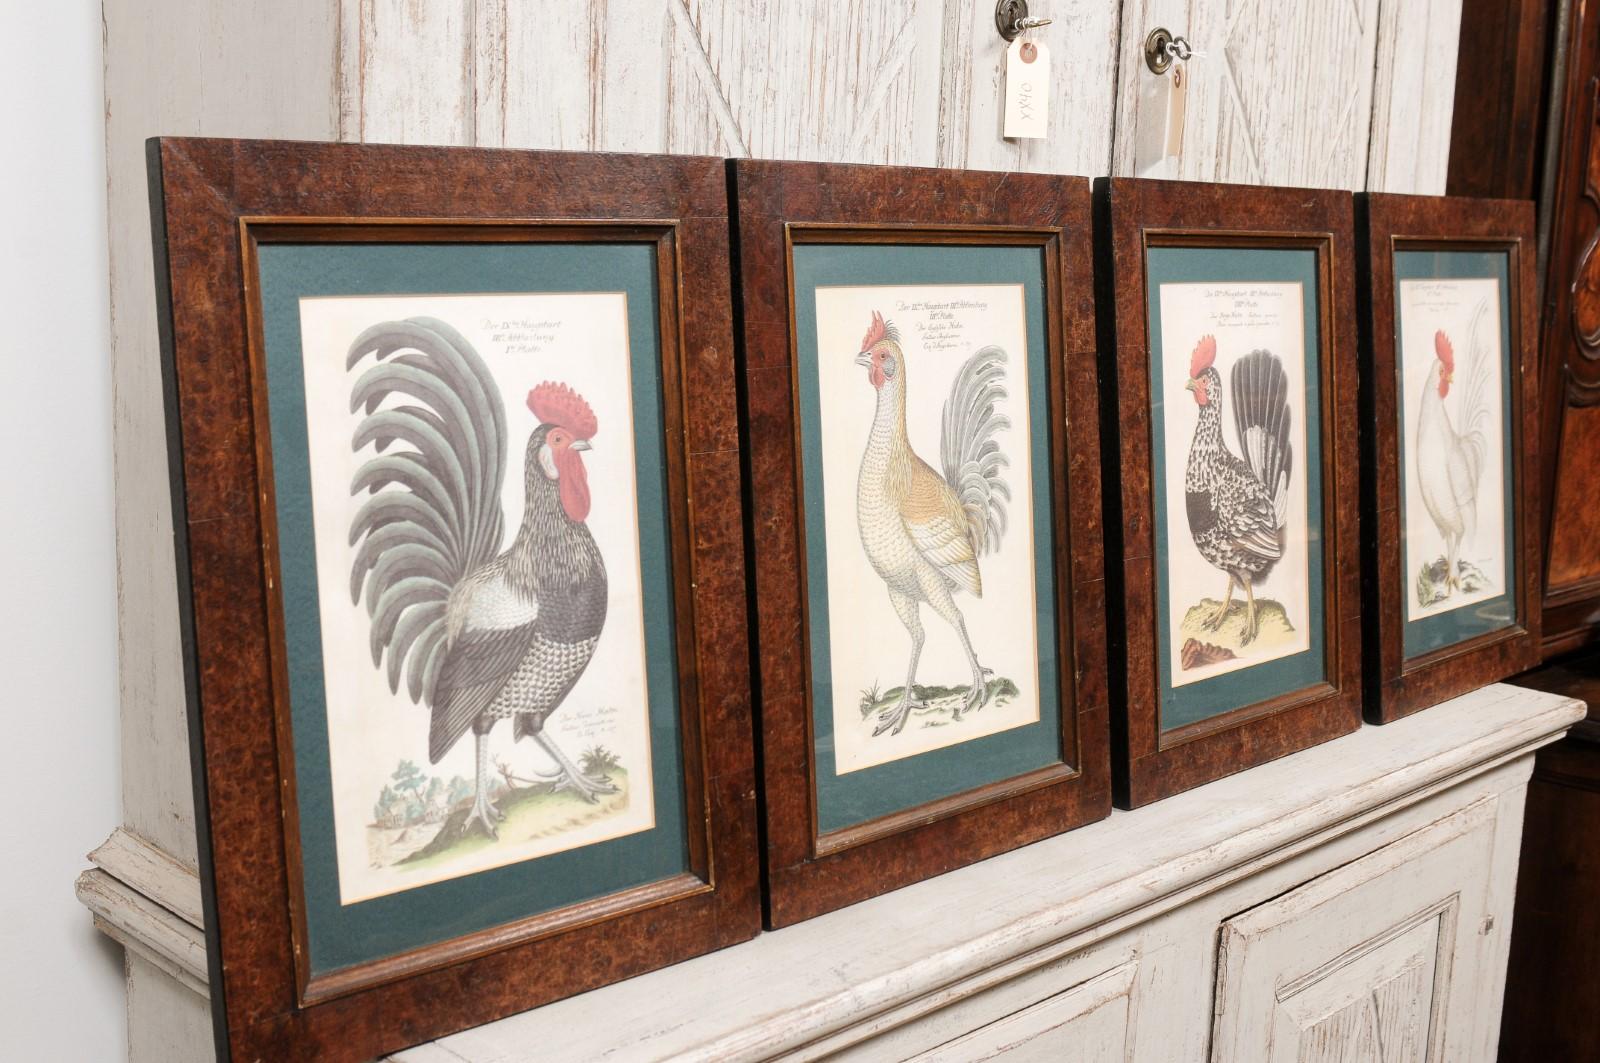 Turn of the Century German Cockerel Prints in Burr Walnut Frames, Set of Four For Sale 5